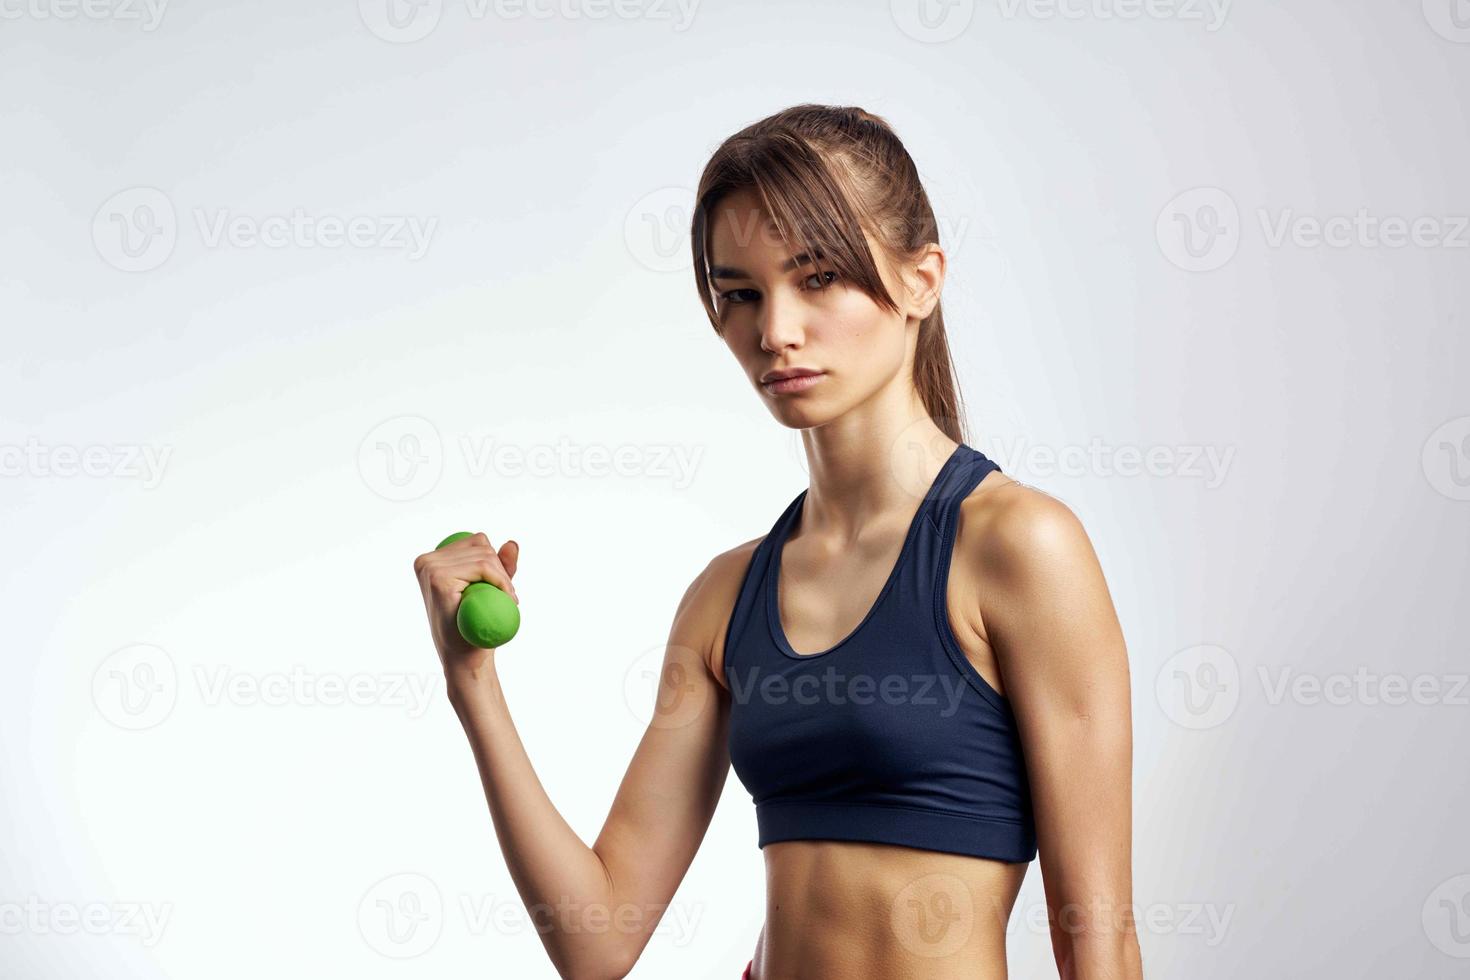 mulher segurando halteres exercite-se ginástica fino figura músculos foto